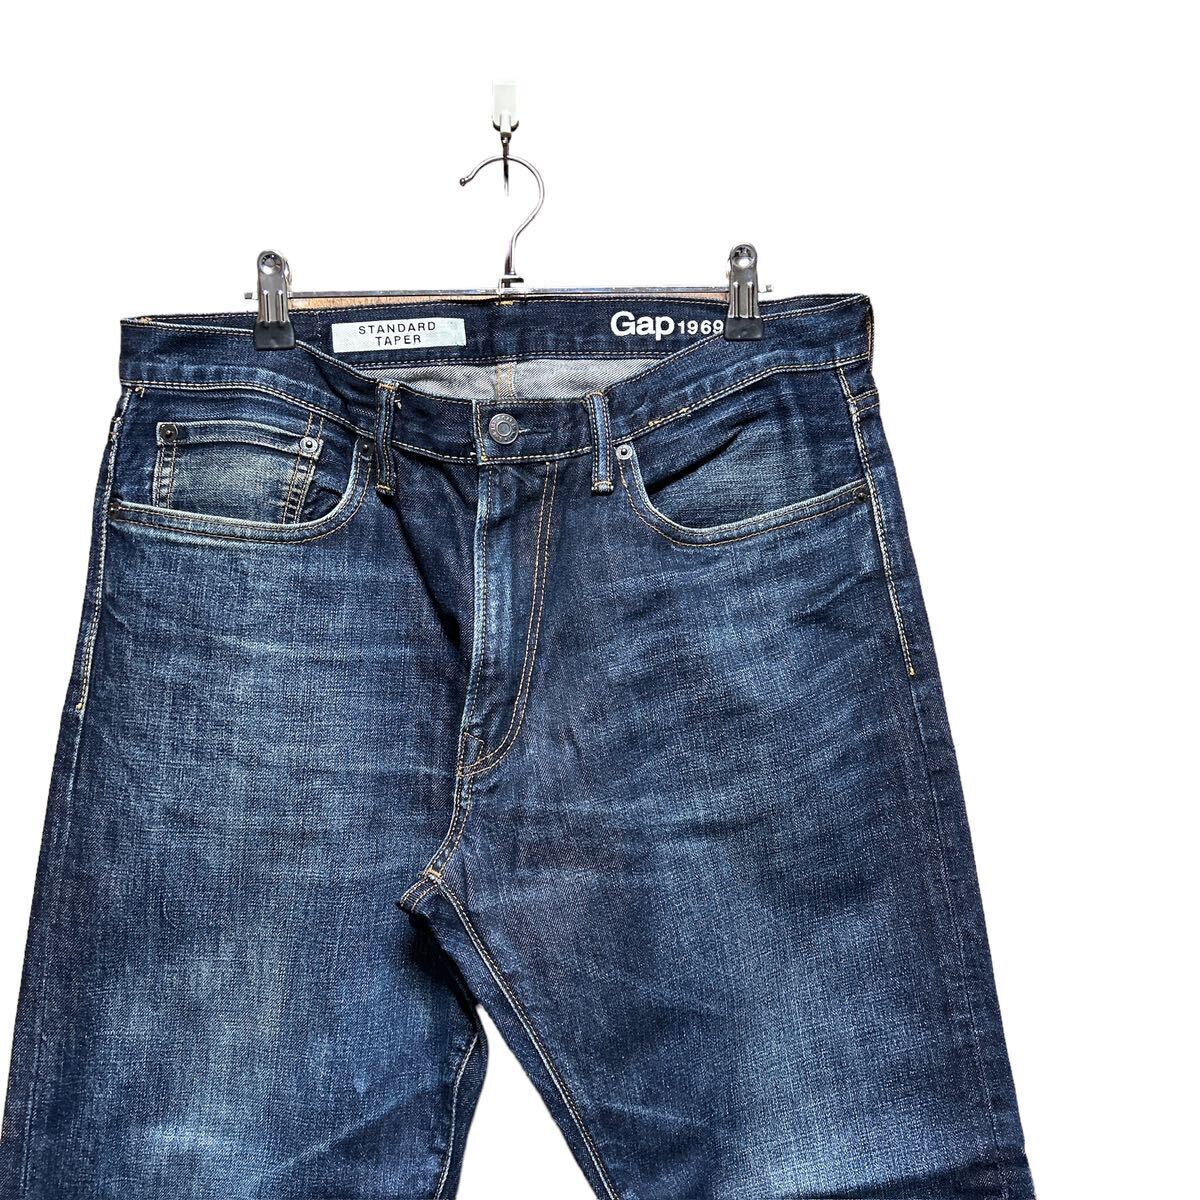 * laundry Press ending * GAP Gap STANDARD TAPER dark blue tailored Denim pants w32 -inch [1873]